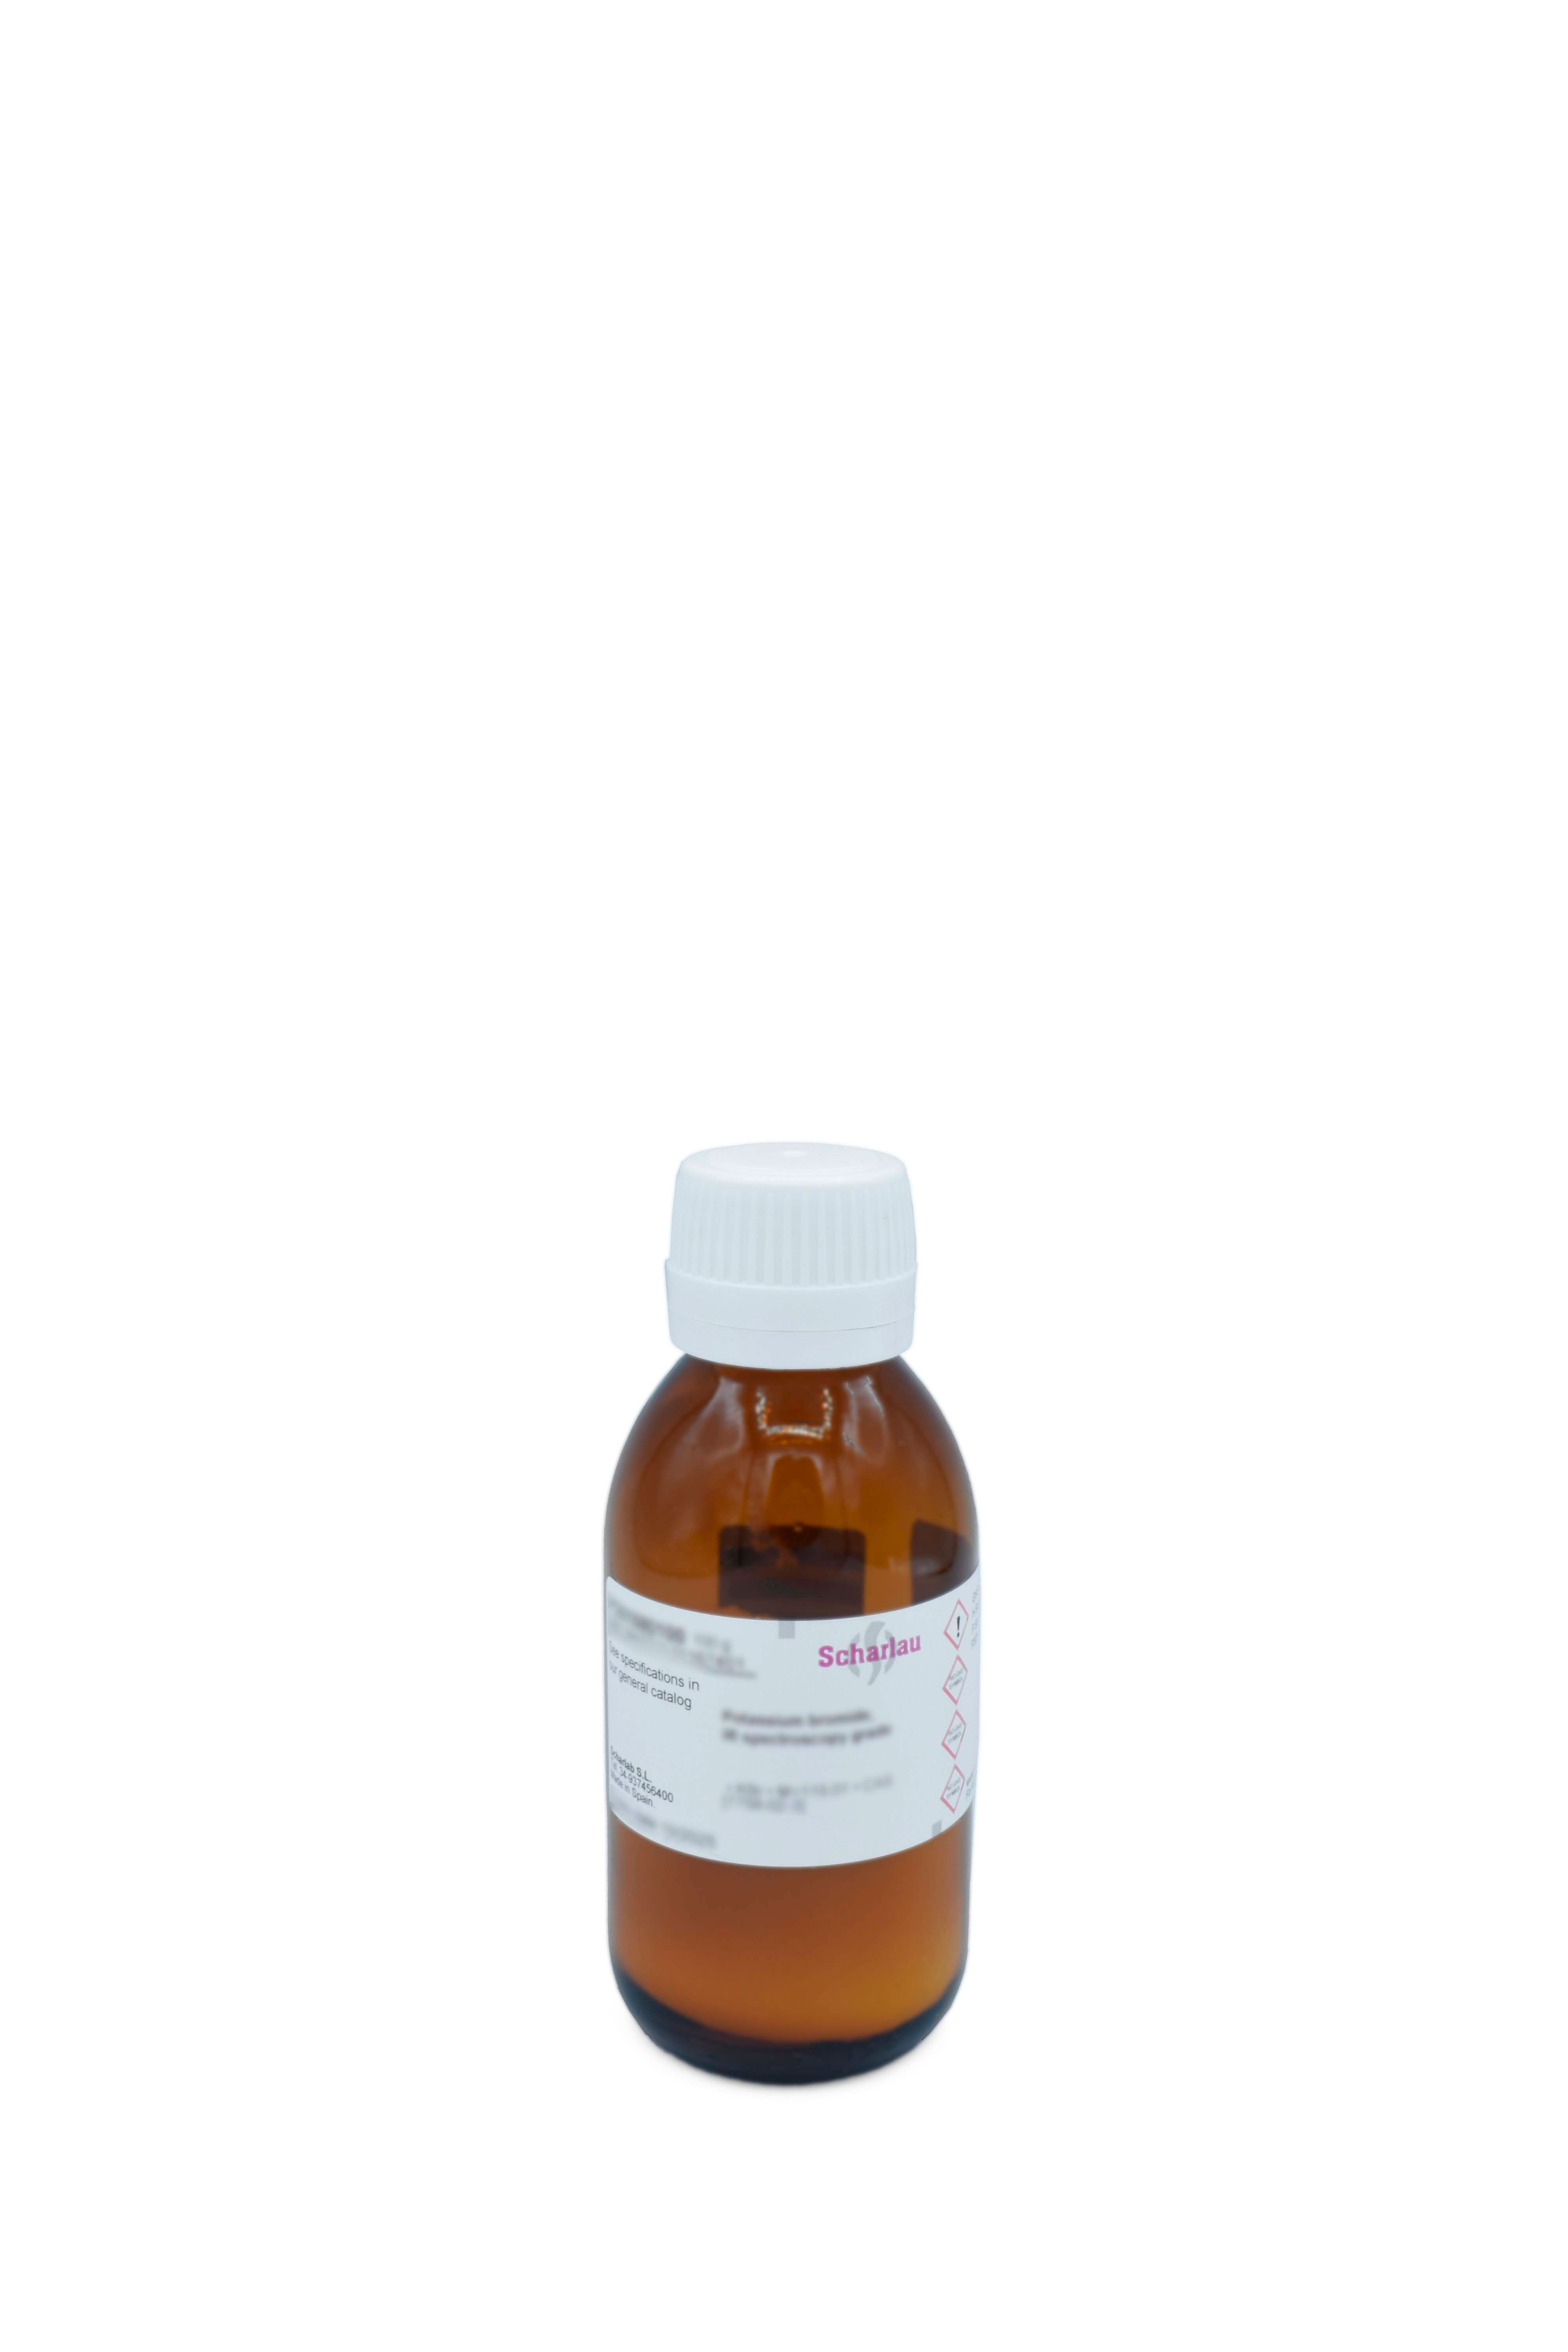 1,5-Diphenylcarbazide, for analysis, ExpertQ®, ACS